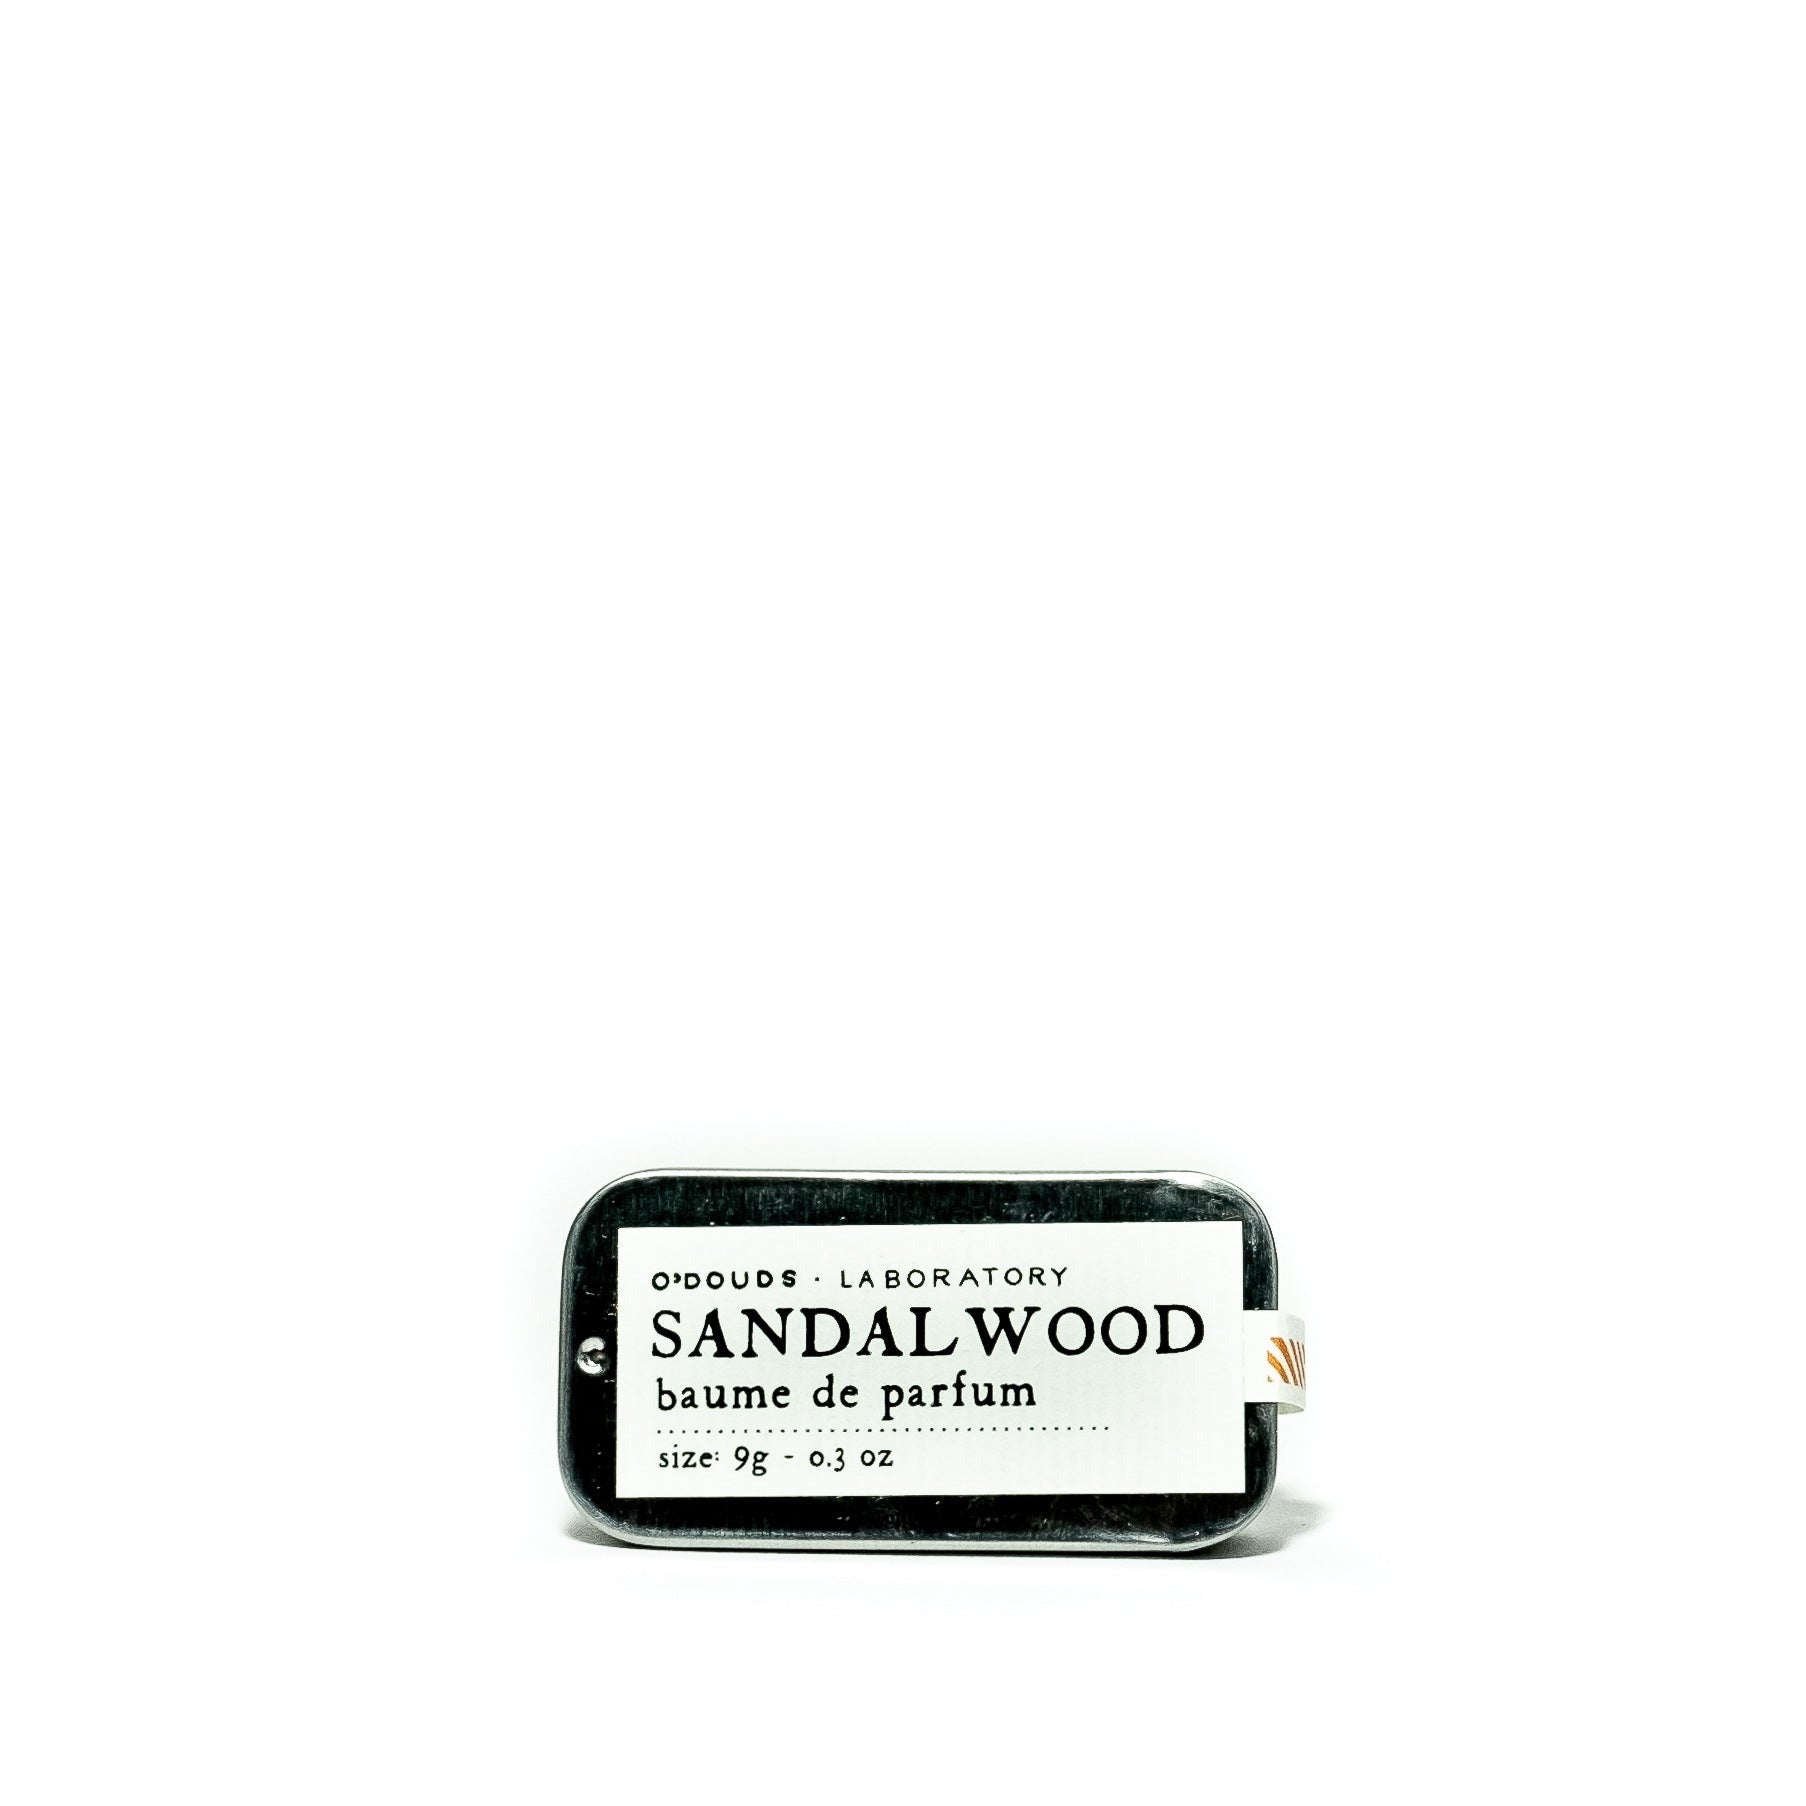 Sandalwood Baume De Parfum tin can white background